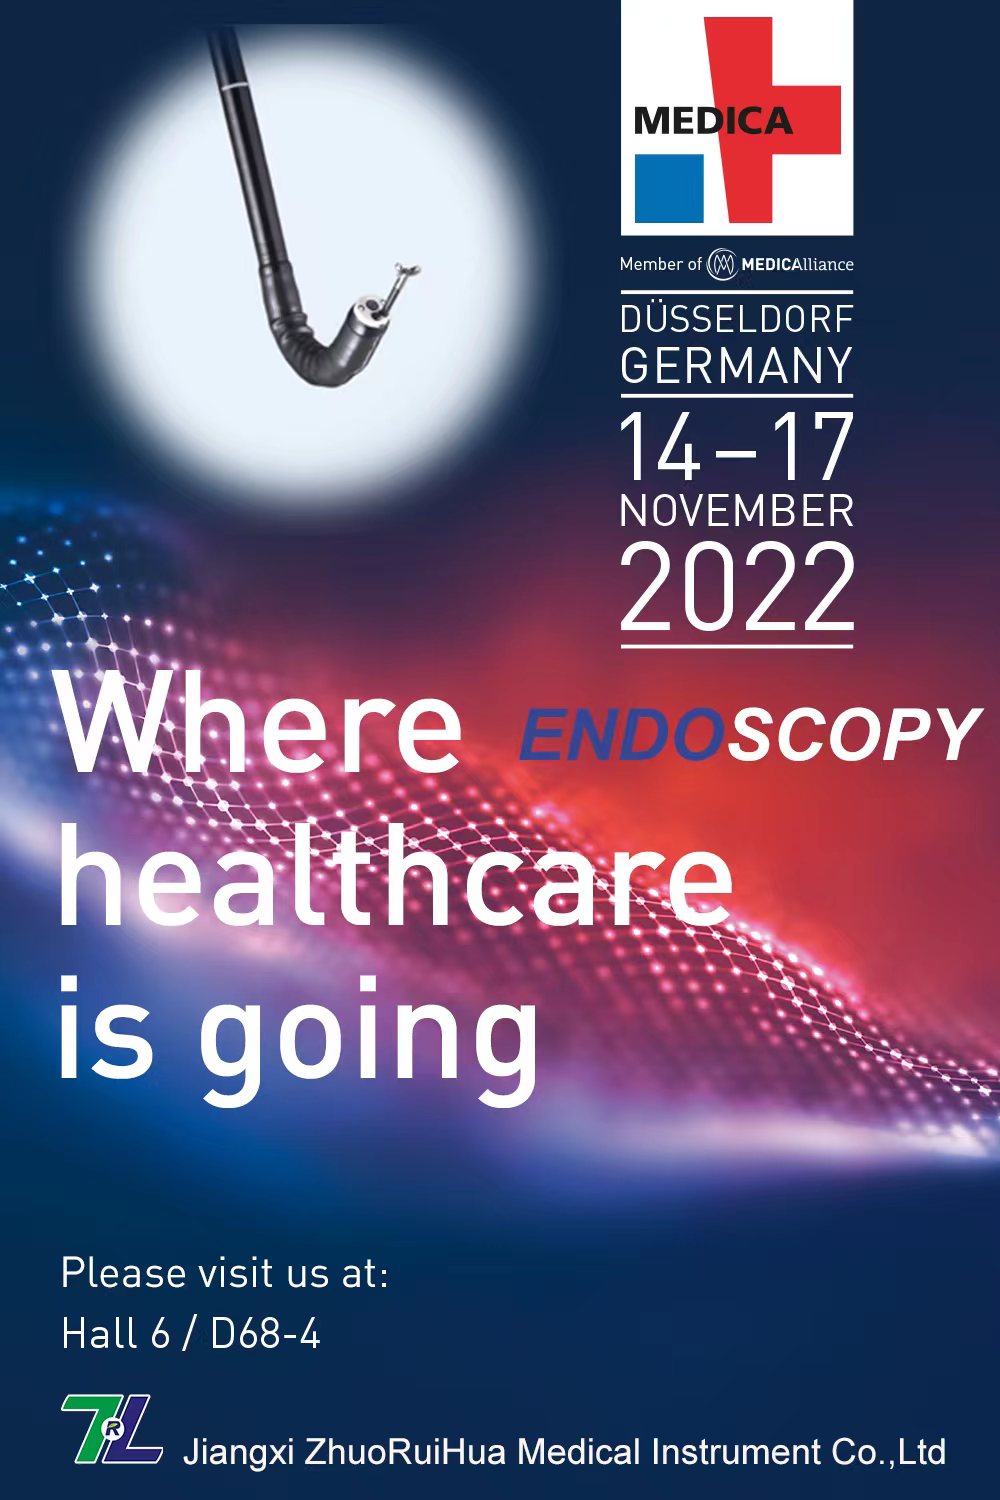 Medica 2022 From 14th to 17th November 2022 – DÜSSELDORF